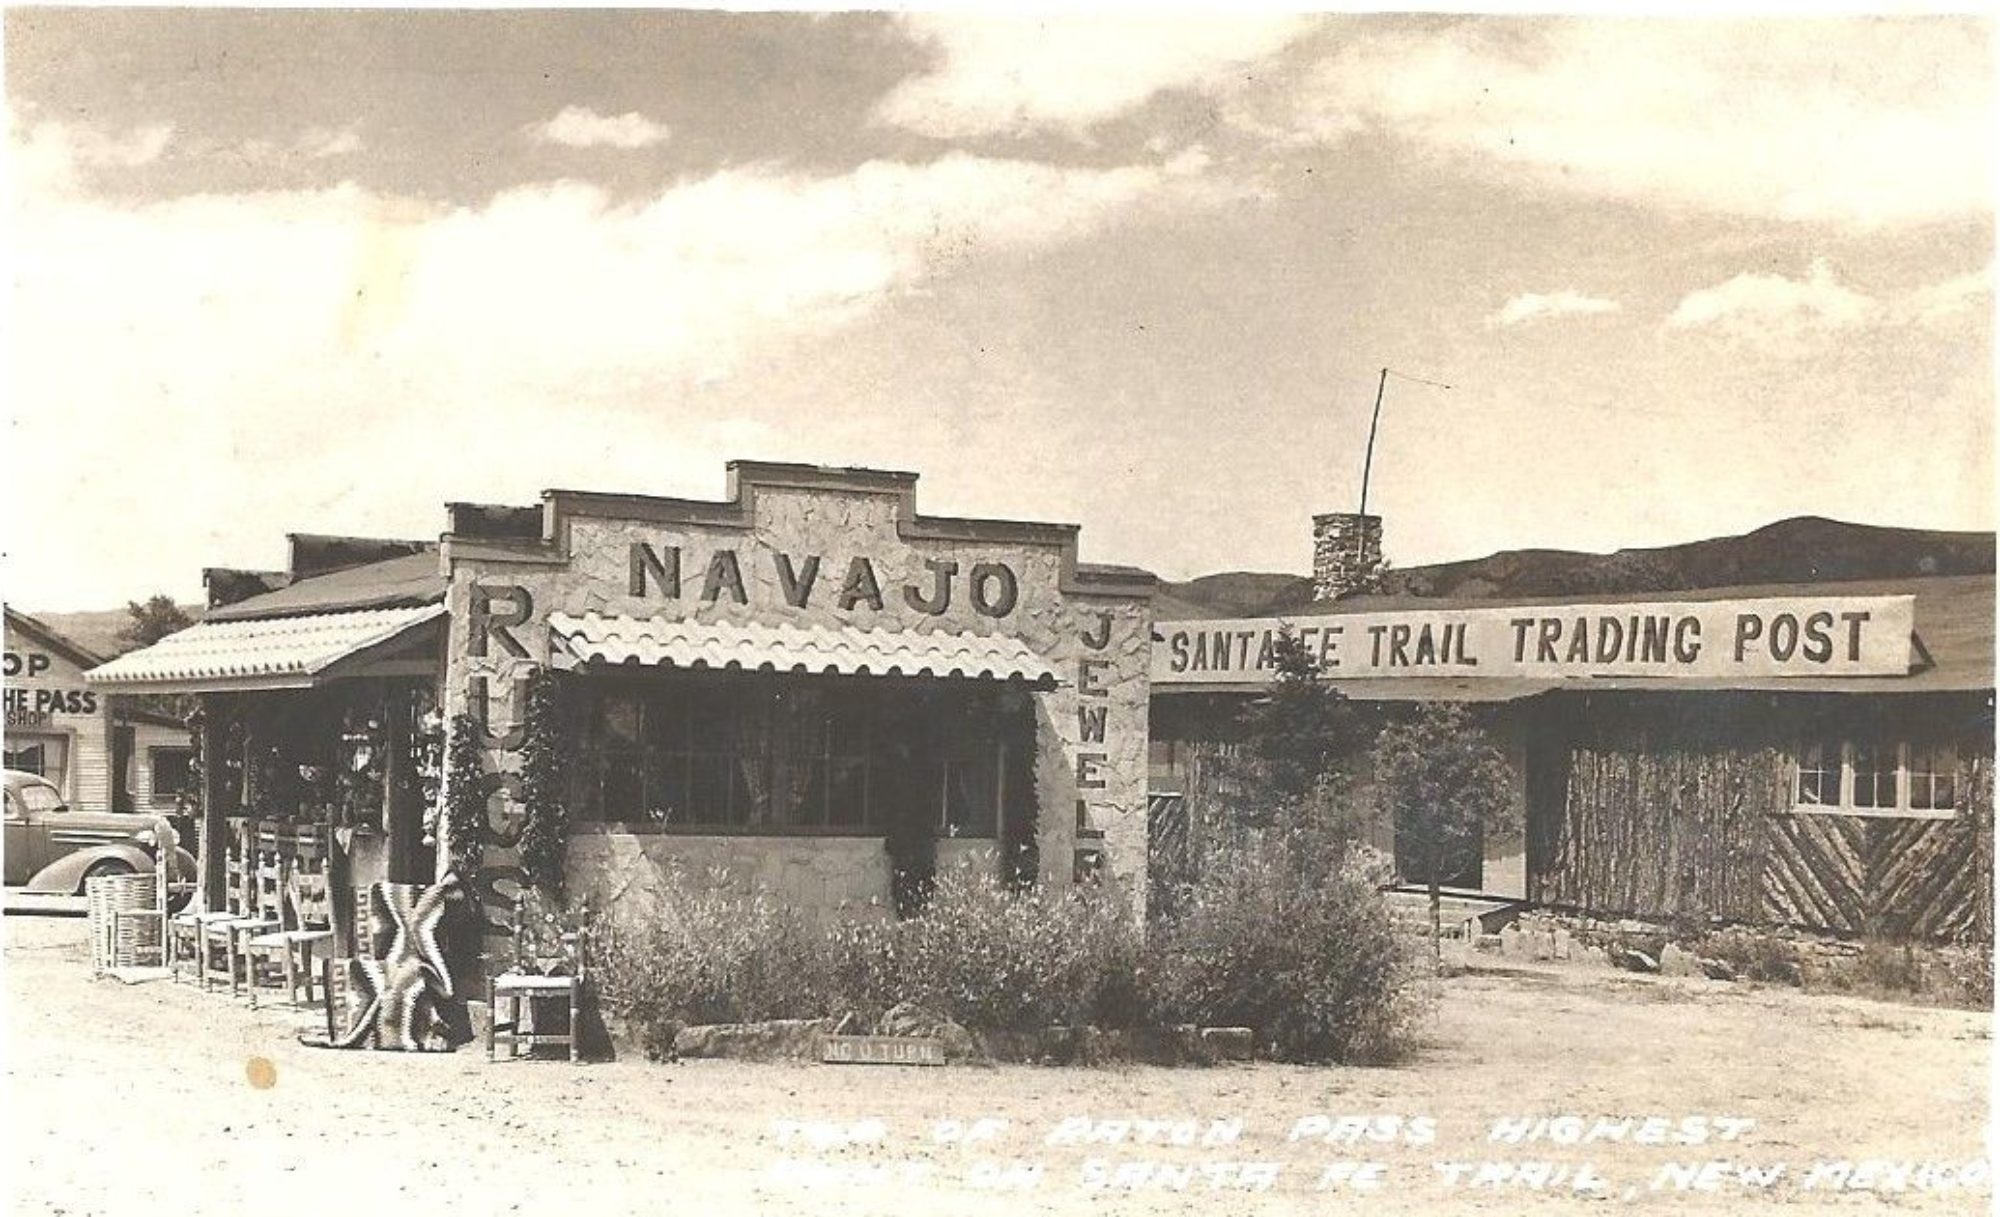 Santa Fe Trail Trail Trading Post